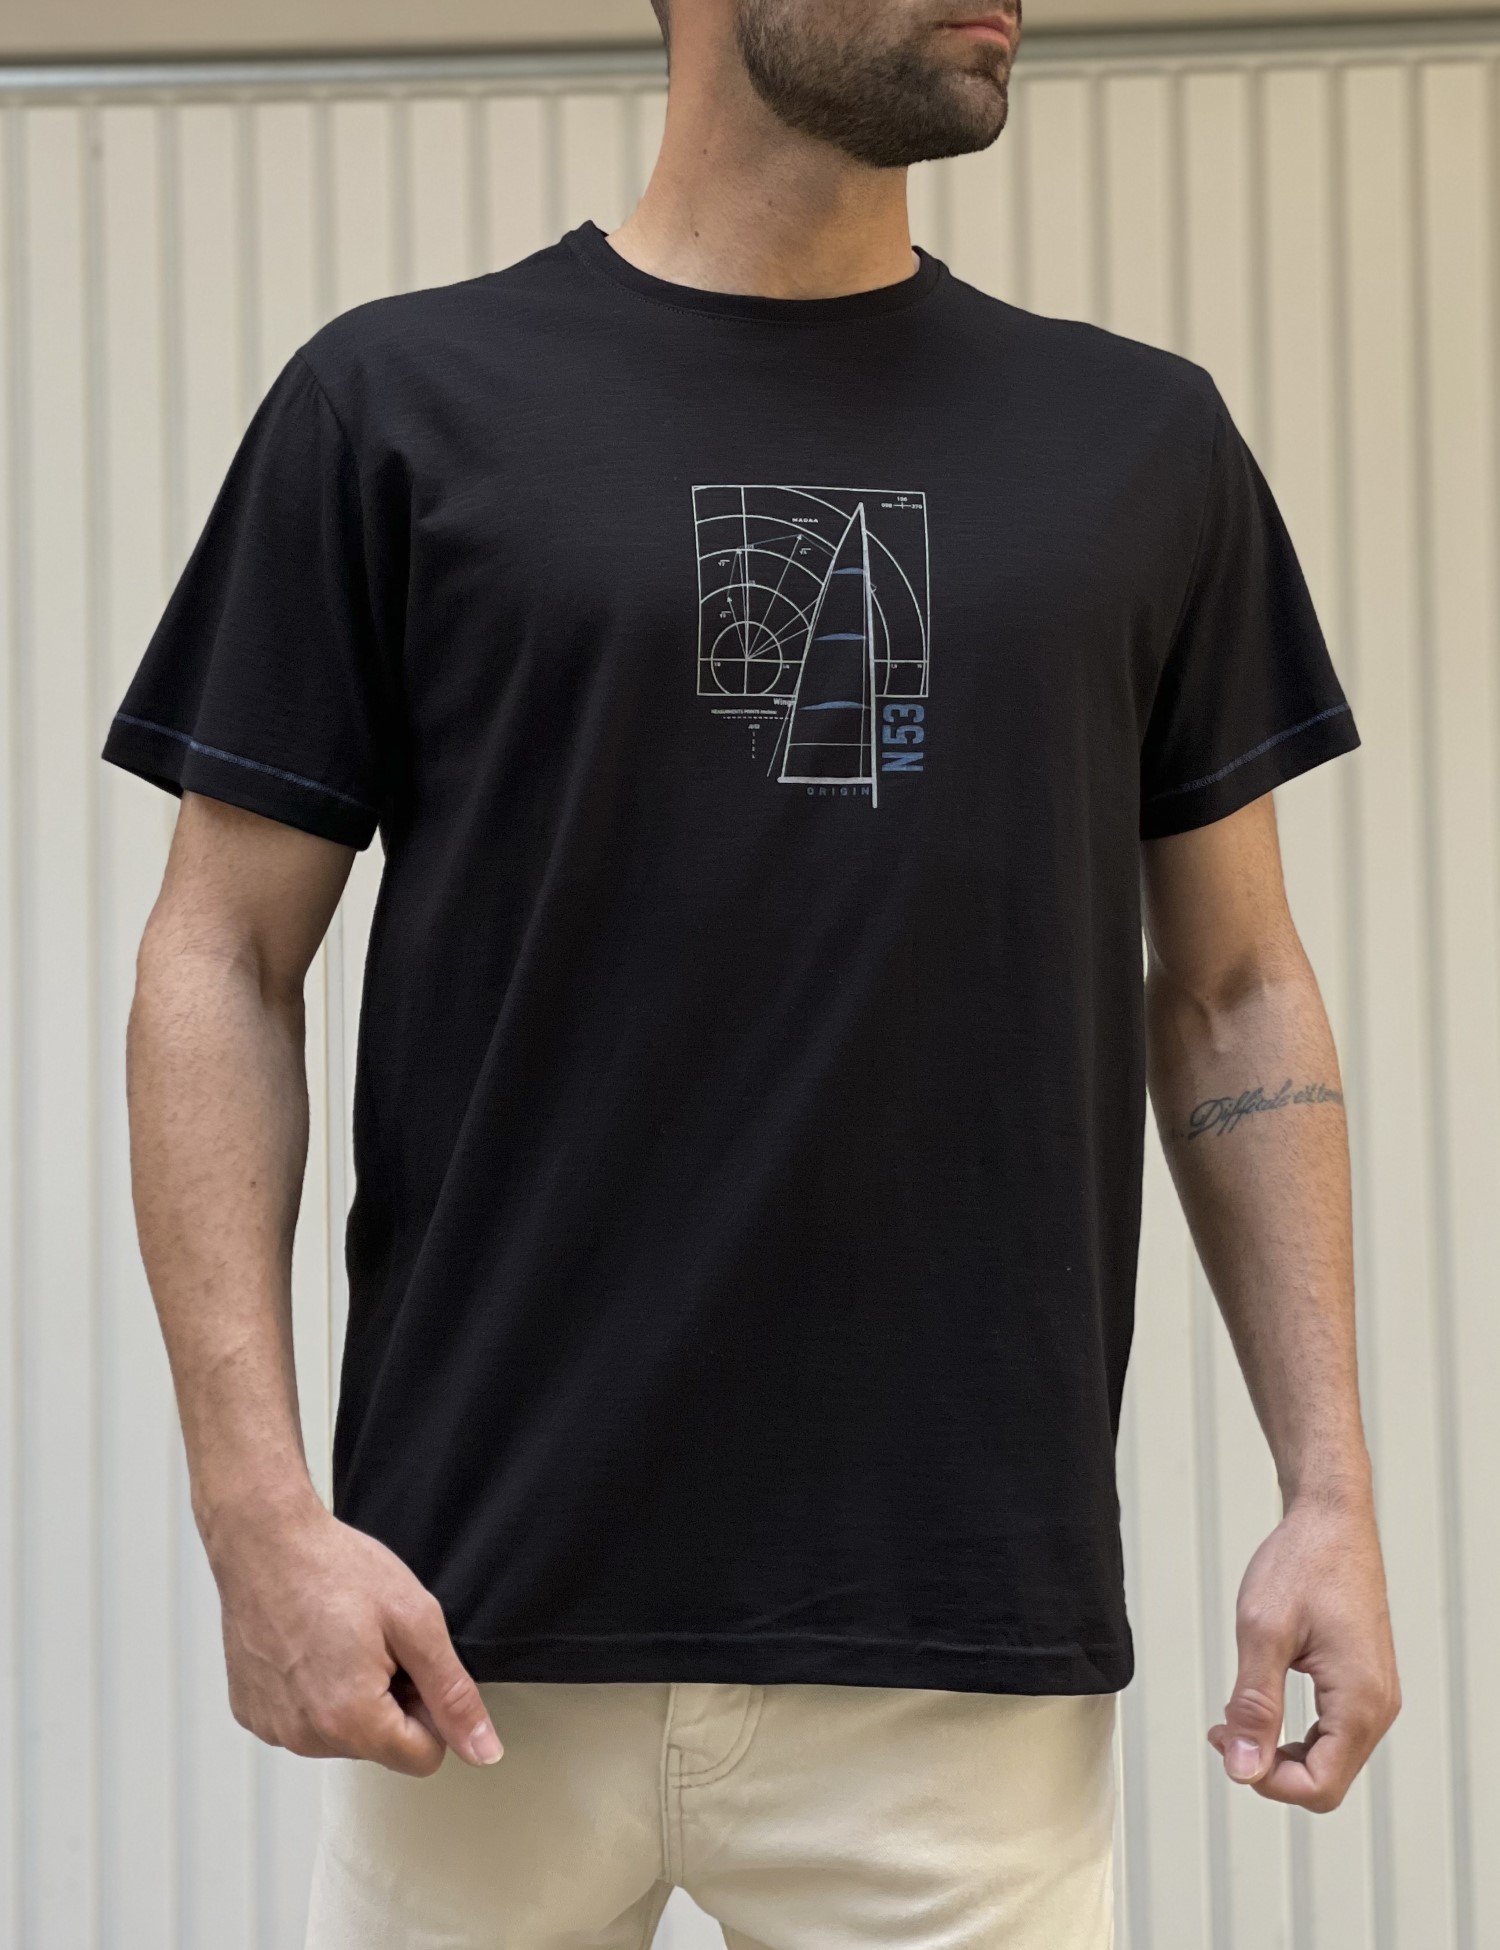 – ORIGIN ανδρικο μαυρο βαμβακερο T-shirt με σχεδιο 232710